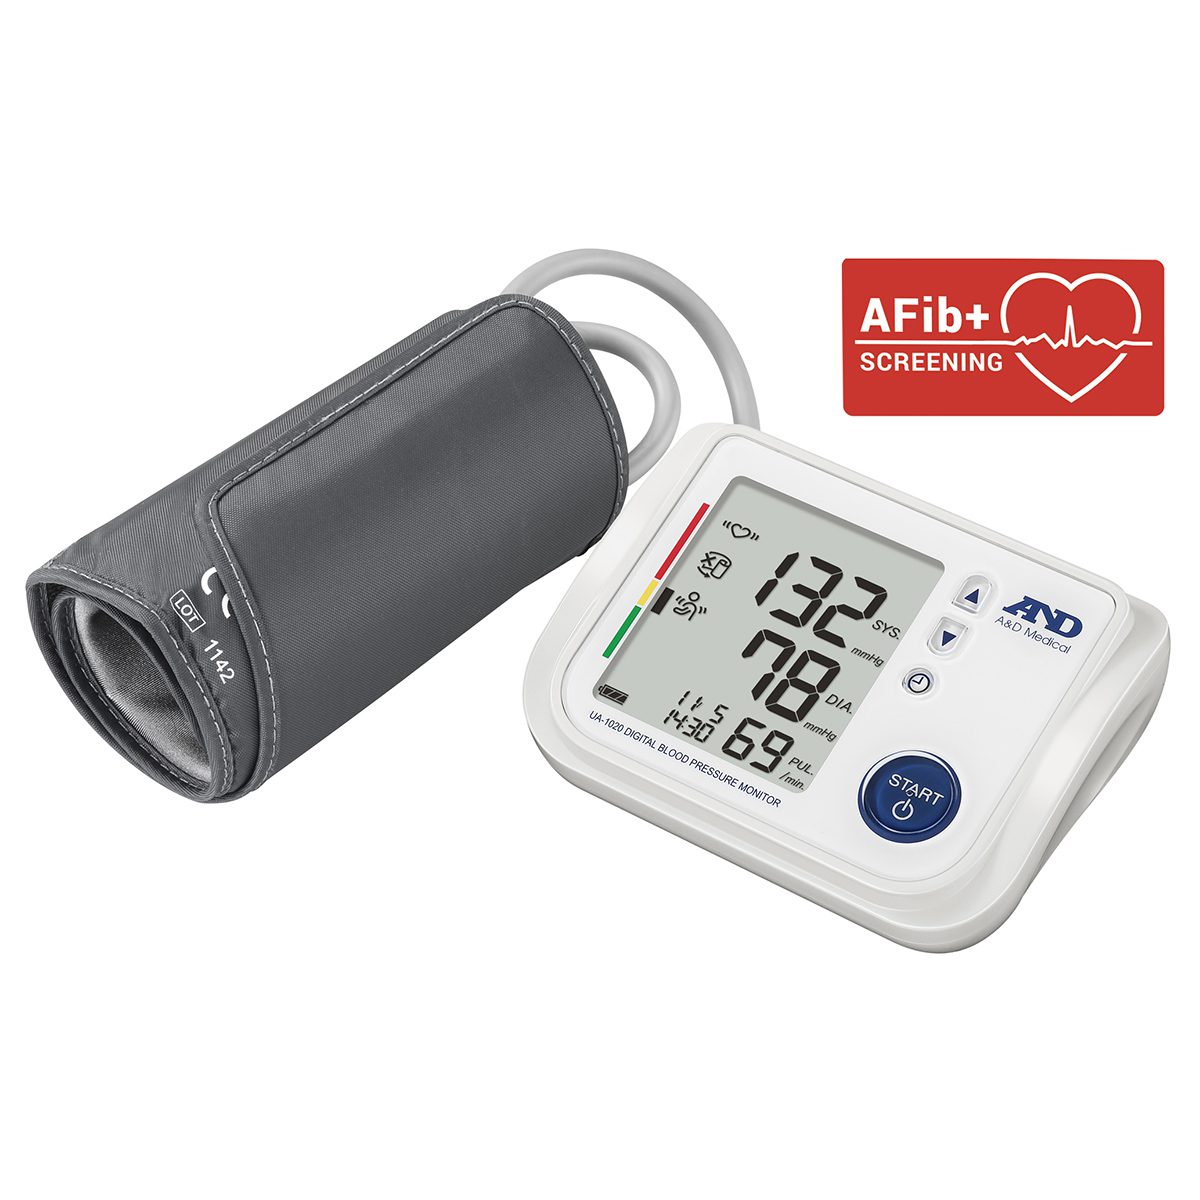 A&D Medical UB-525 Wrist Blood Pressure Monitor